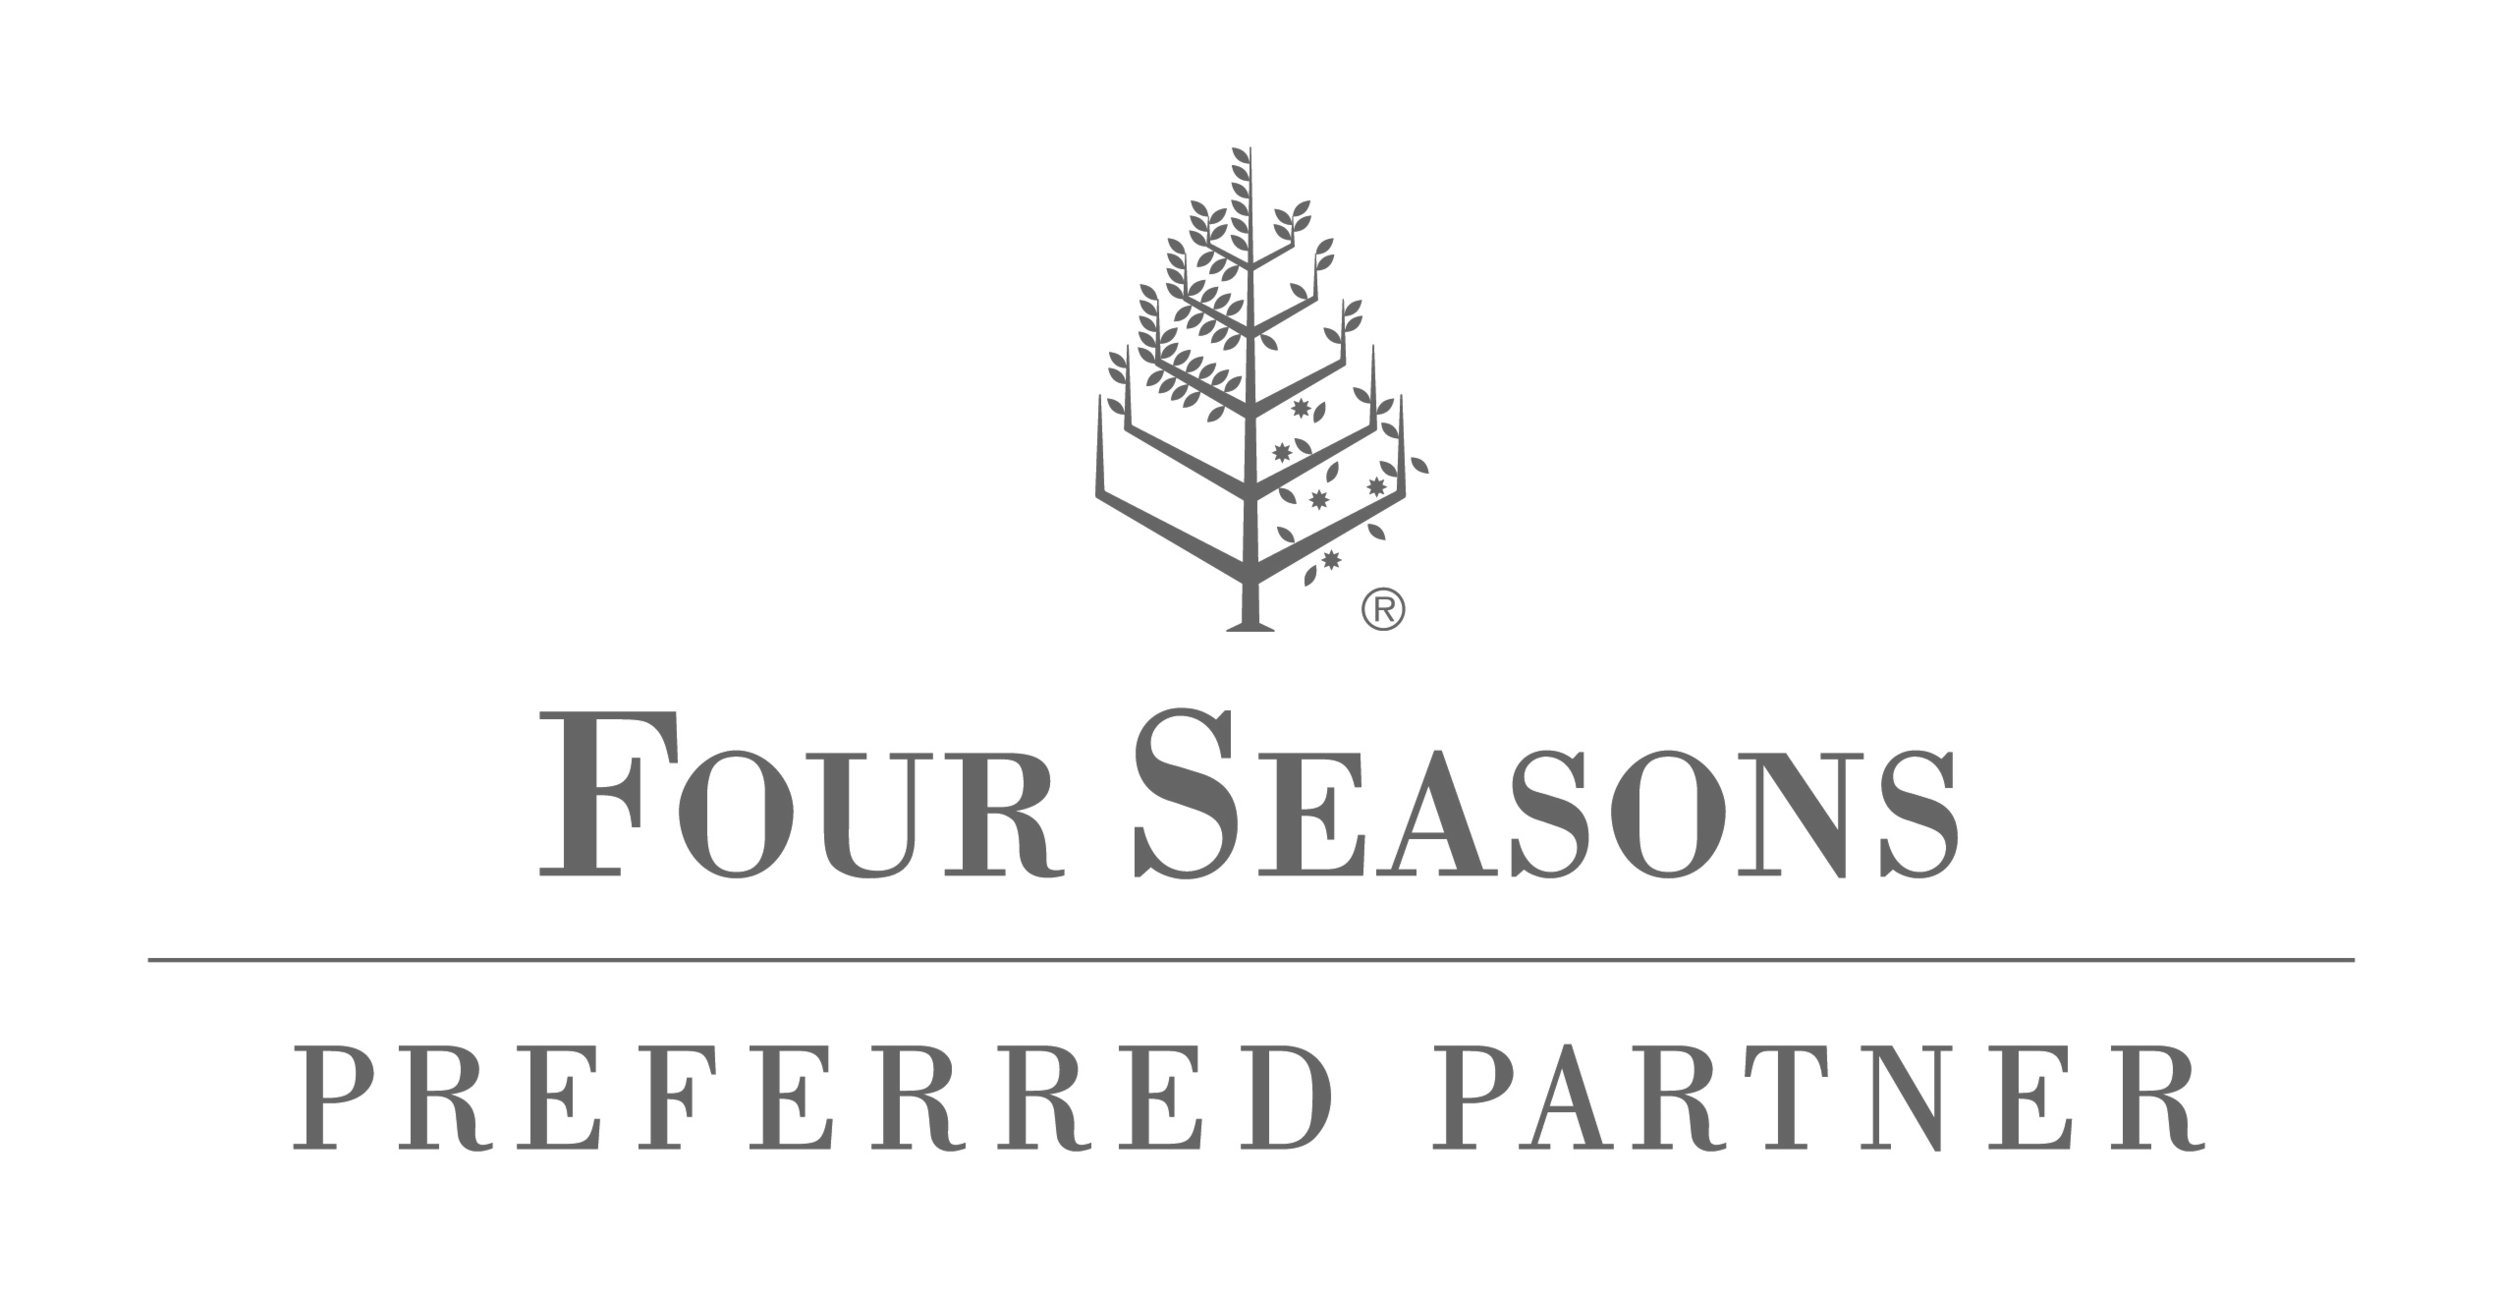 Four-Seasons-Preferred-Partners copy.jpg